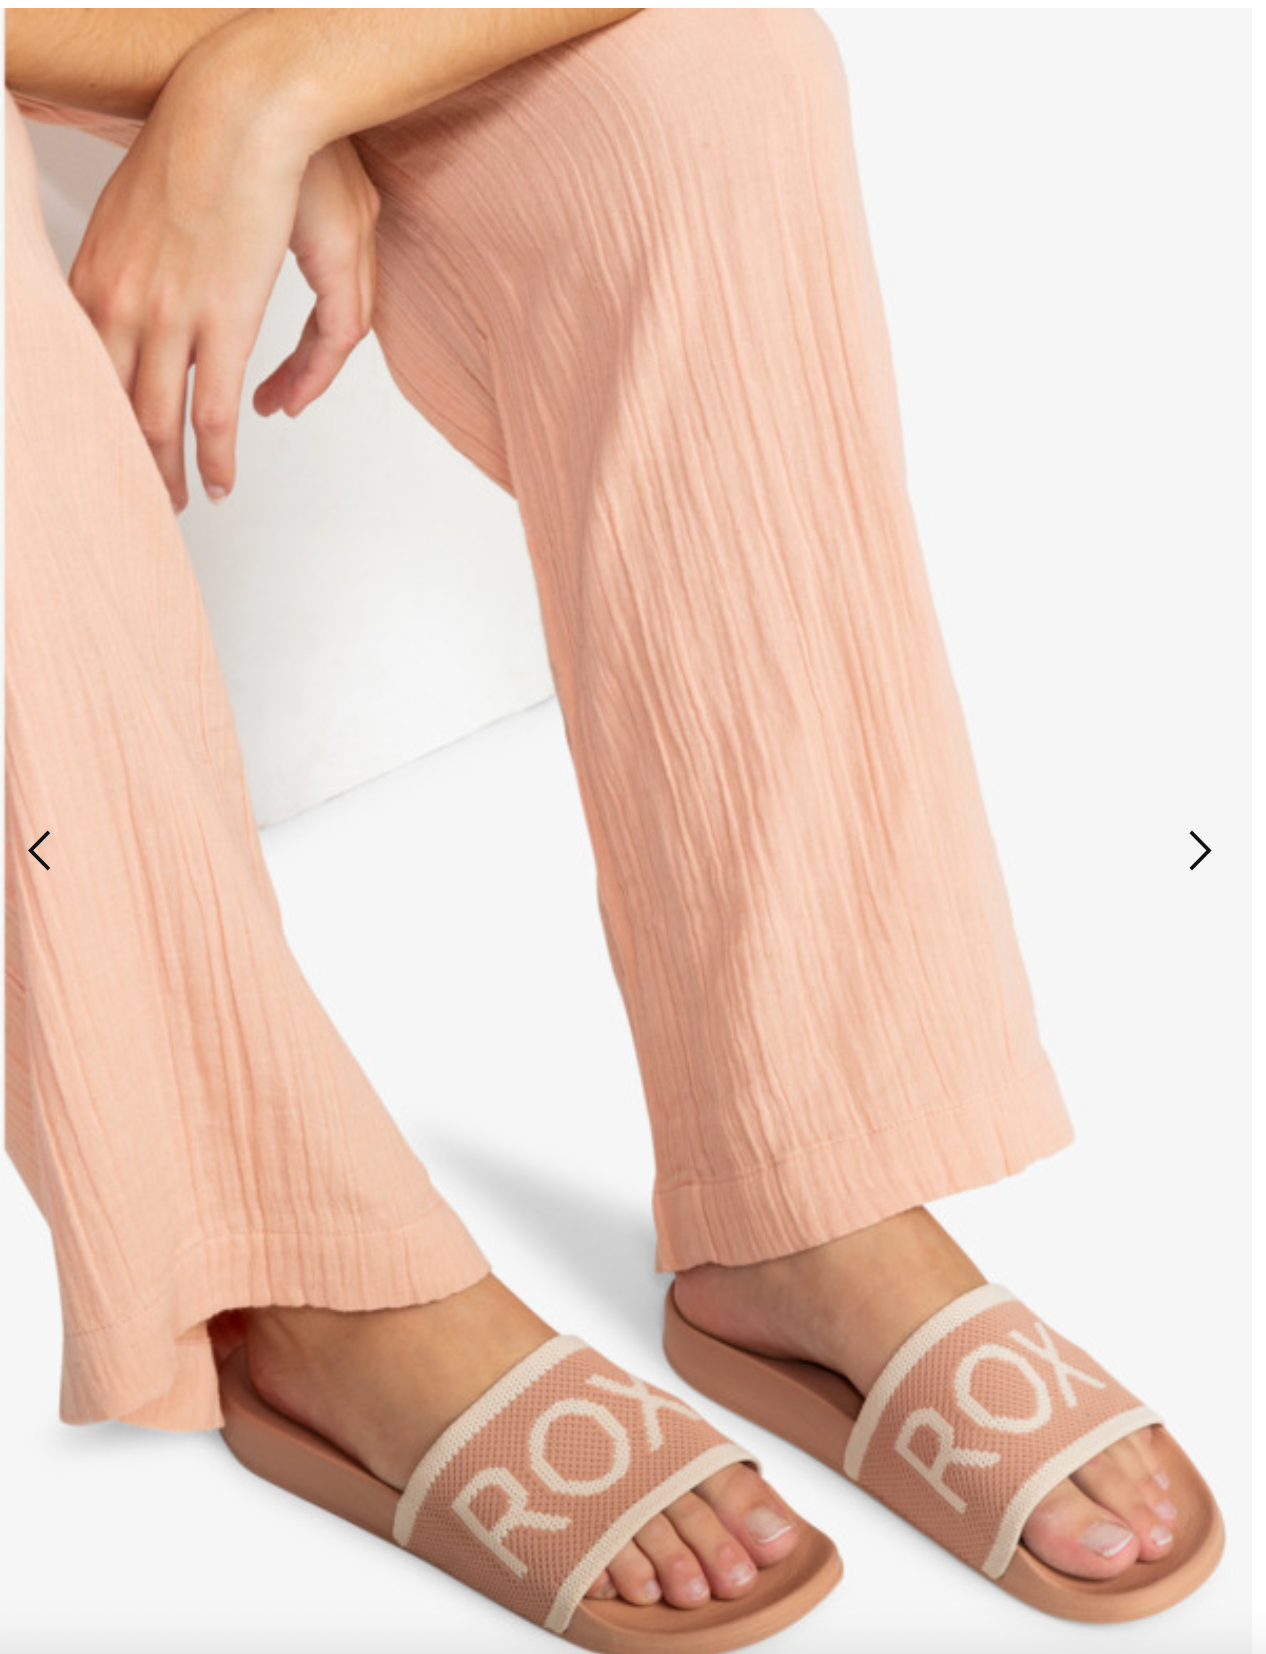 ROXY Slippy Knit - Sandals for Women